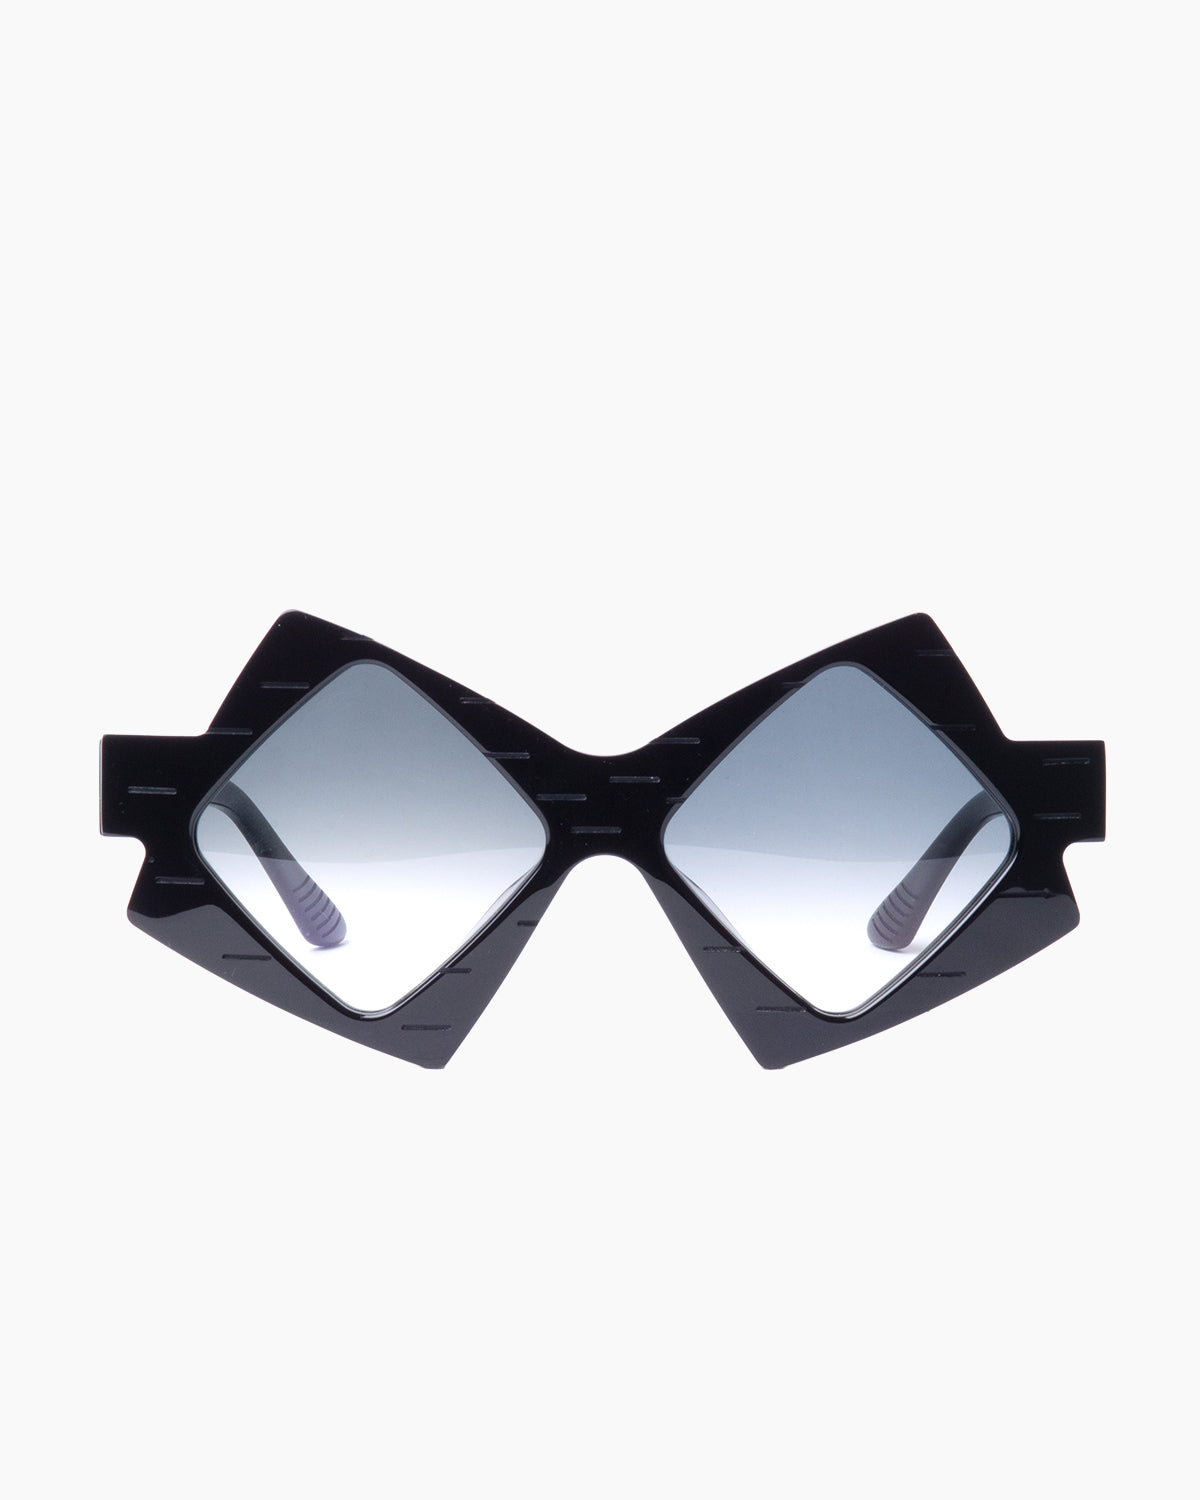 Yohji Yamamoto - SLOOK 004 - A001 | glasses bar:  Marie-Sophie Dion